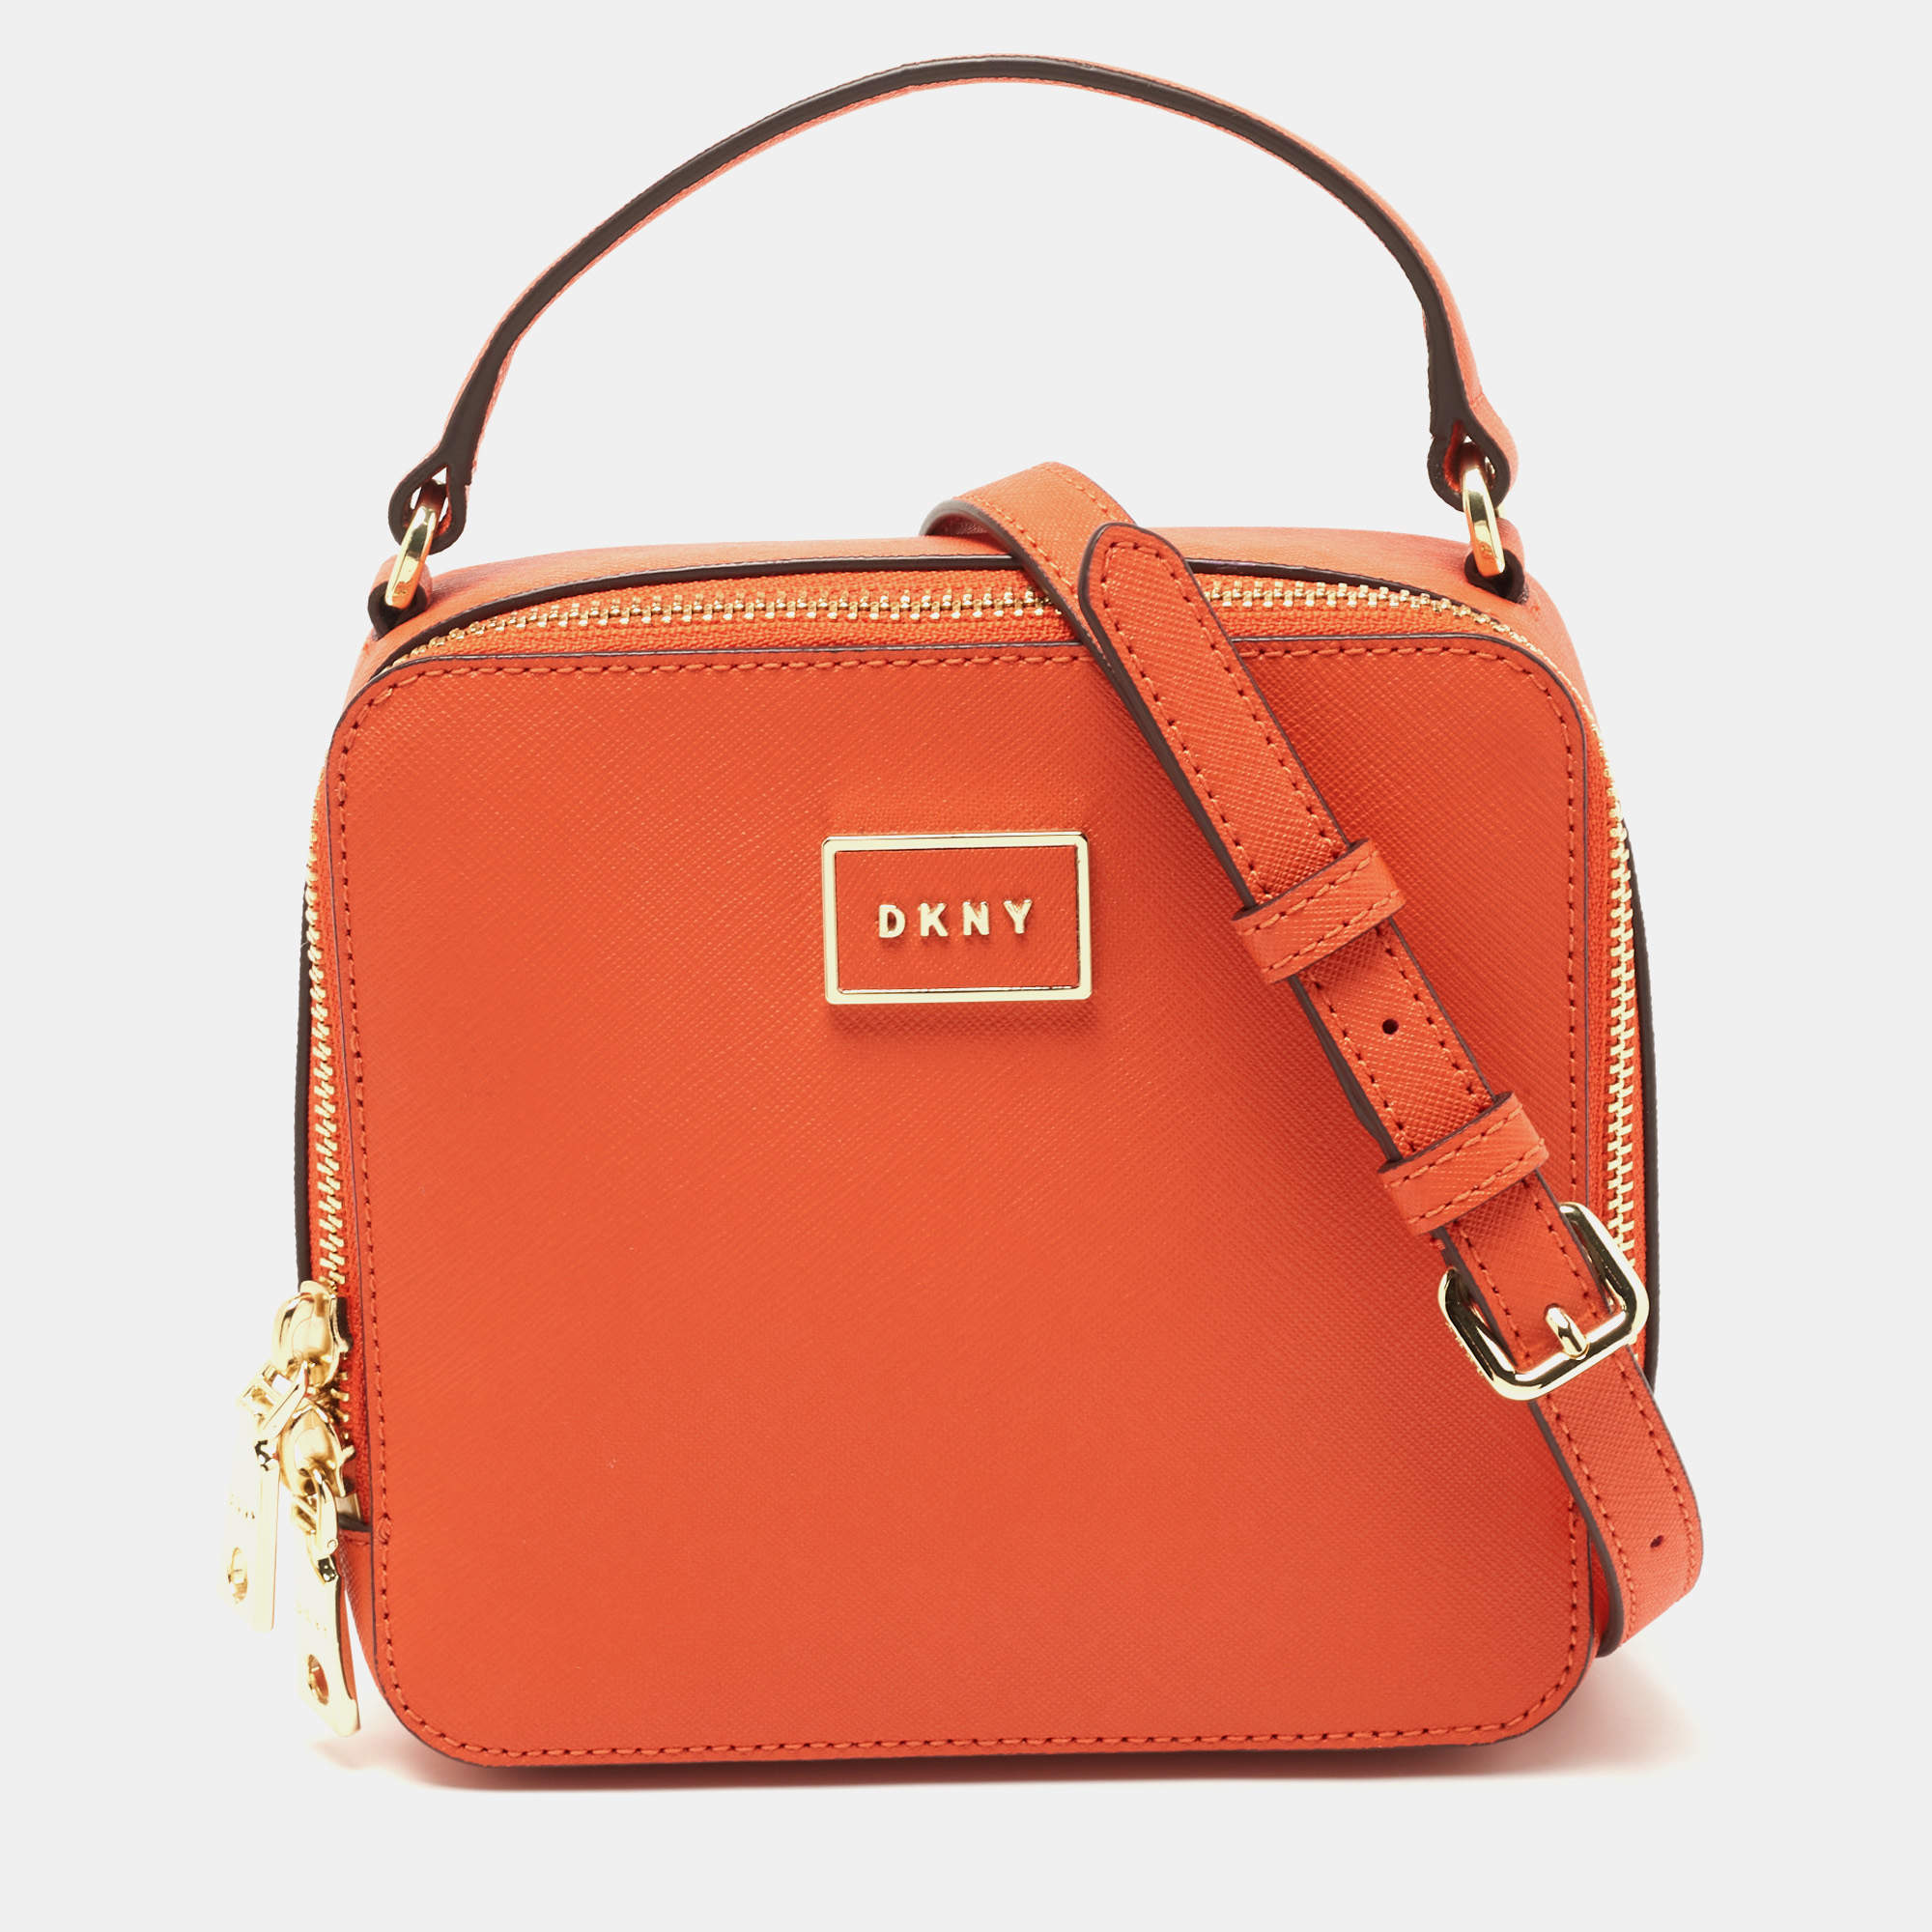 DKNY Orange Saffiano Leather Crossbody Bag